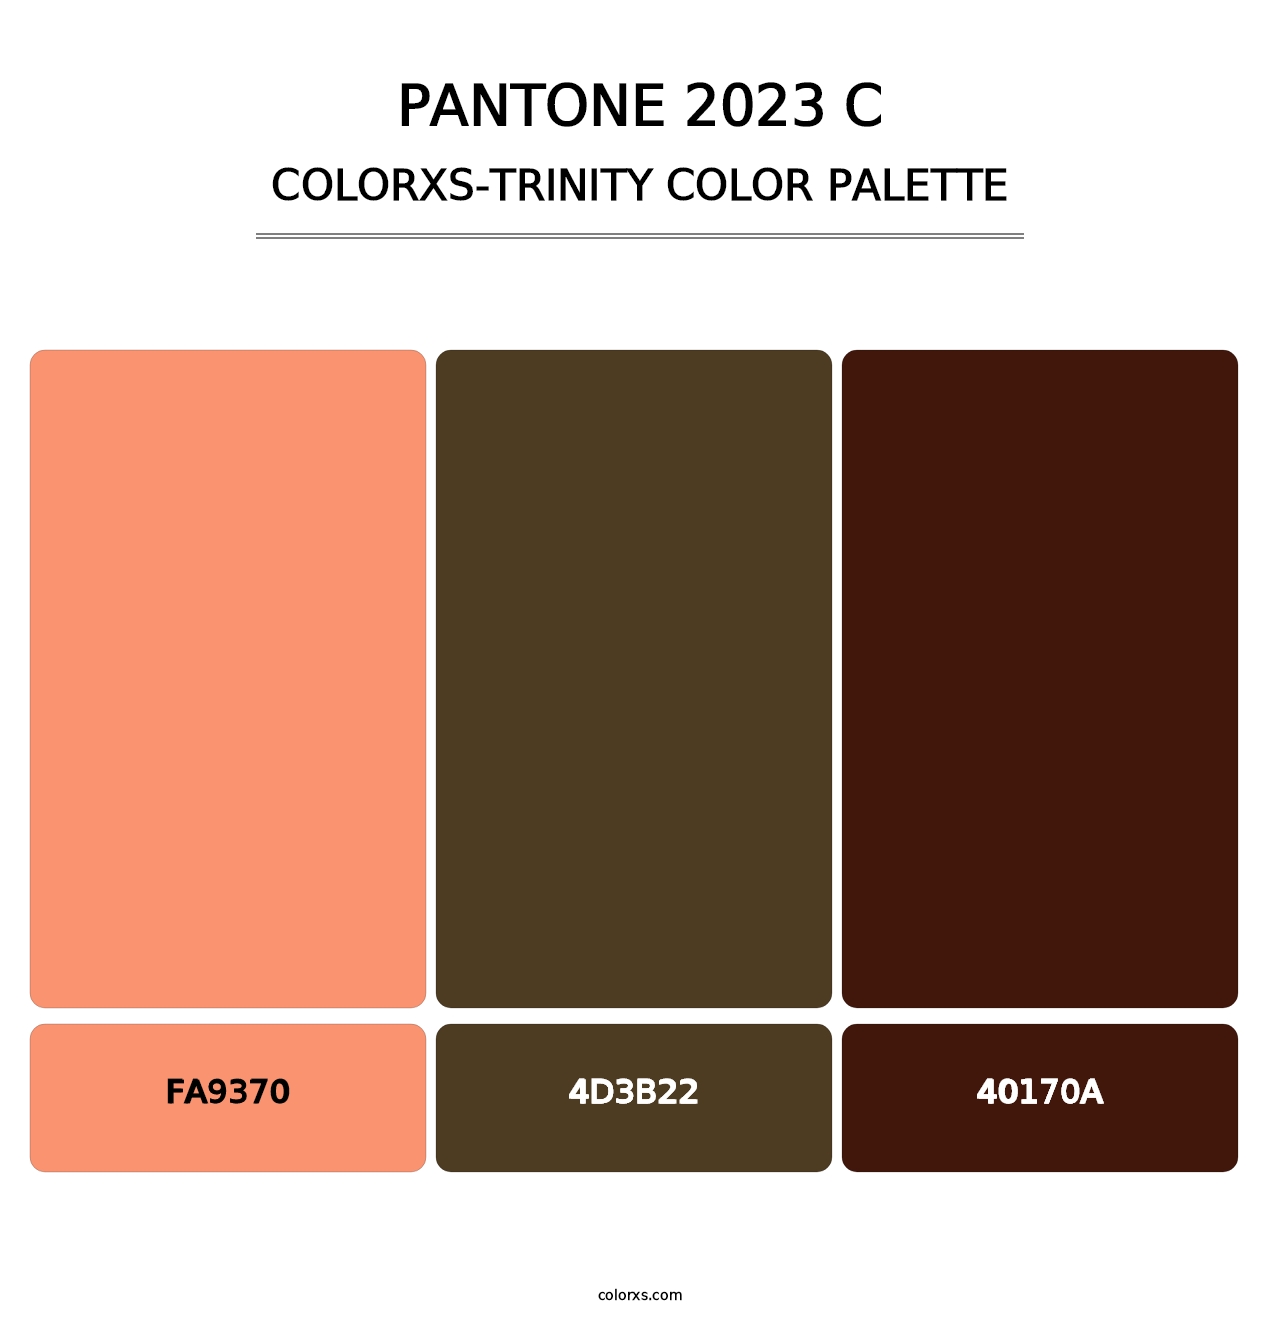 PANTONE 2023 C - Colorxs Trinity Palette